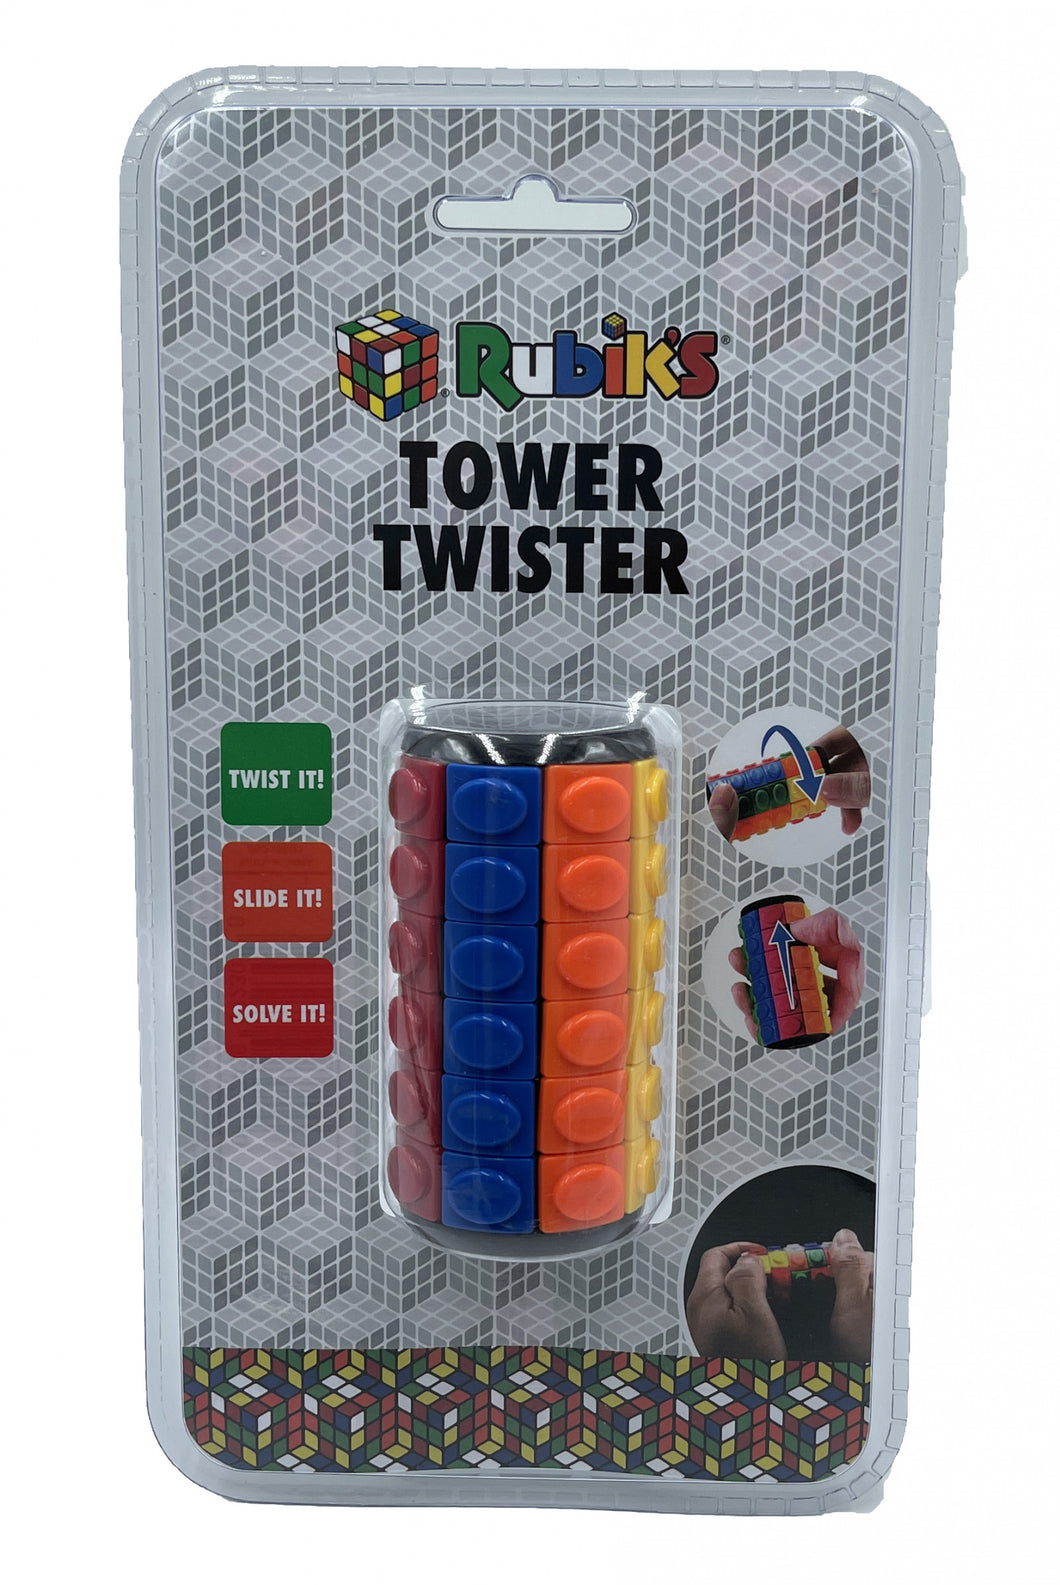 Rubiks Tower Twister Fidget Puzzle Toy